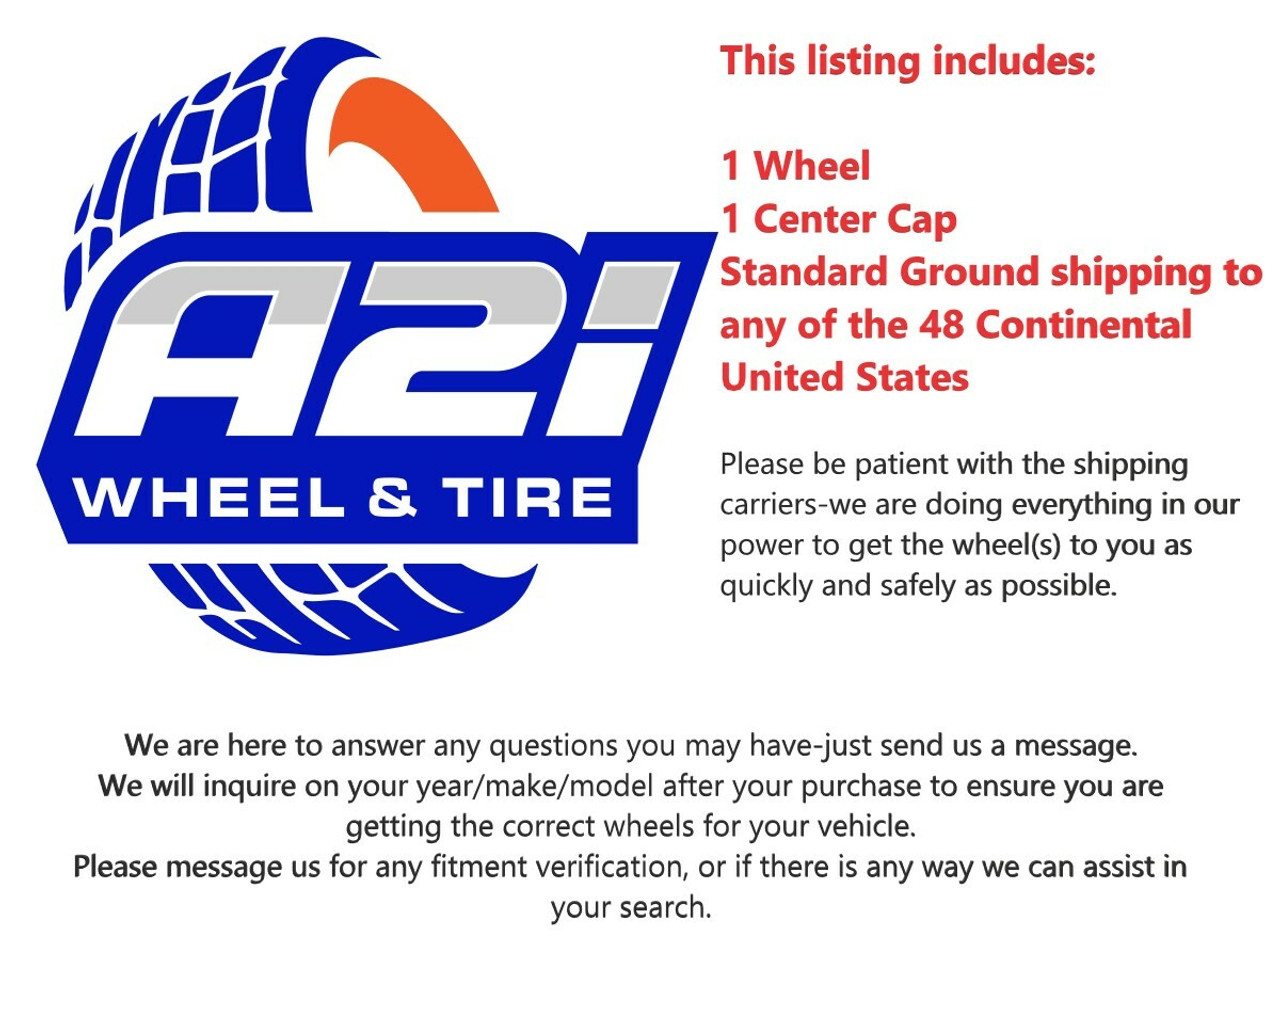 Fuel FC402 Catalyst 22x12 6x5.5 Platinum Chrome Lip 22" -44mm Lifted Truck Wheel